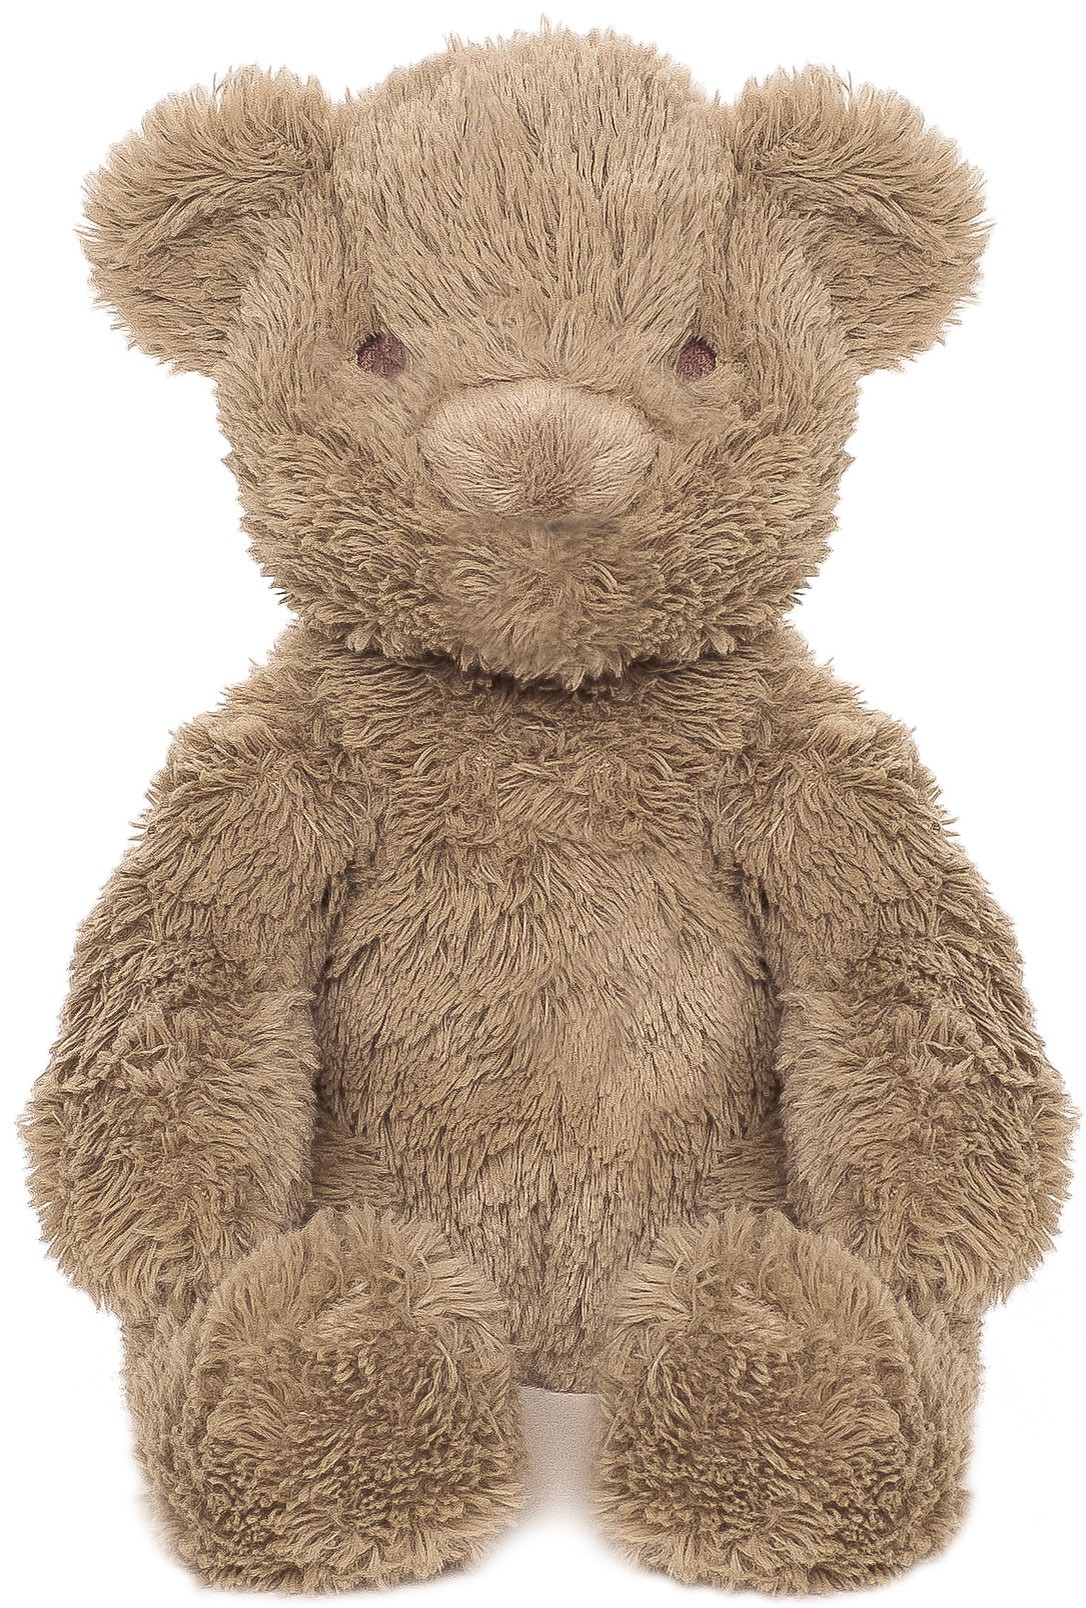 Teddykompaniet Bamse Lolli Teddy, 25cm - Teddykompaniet